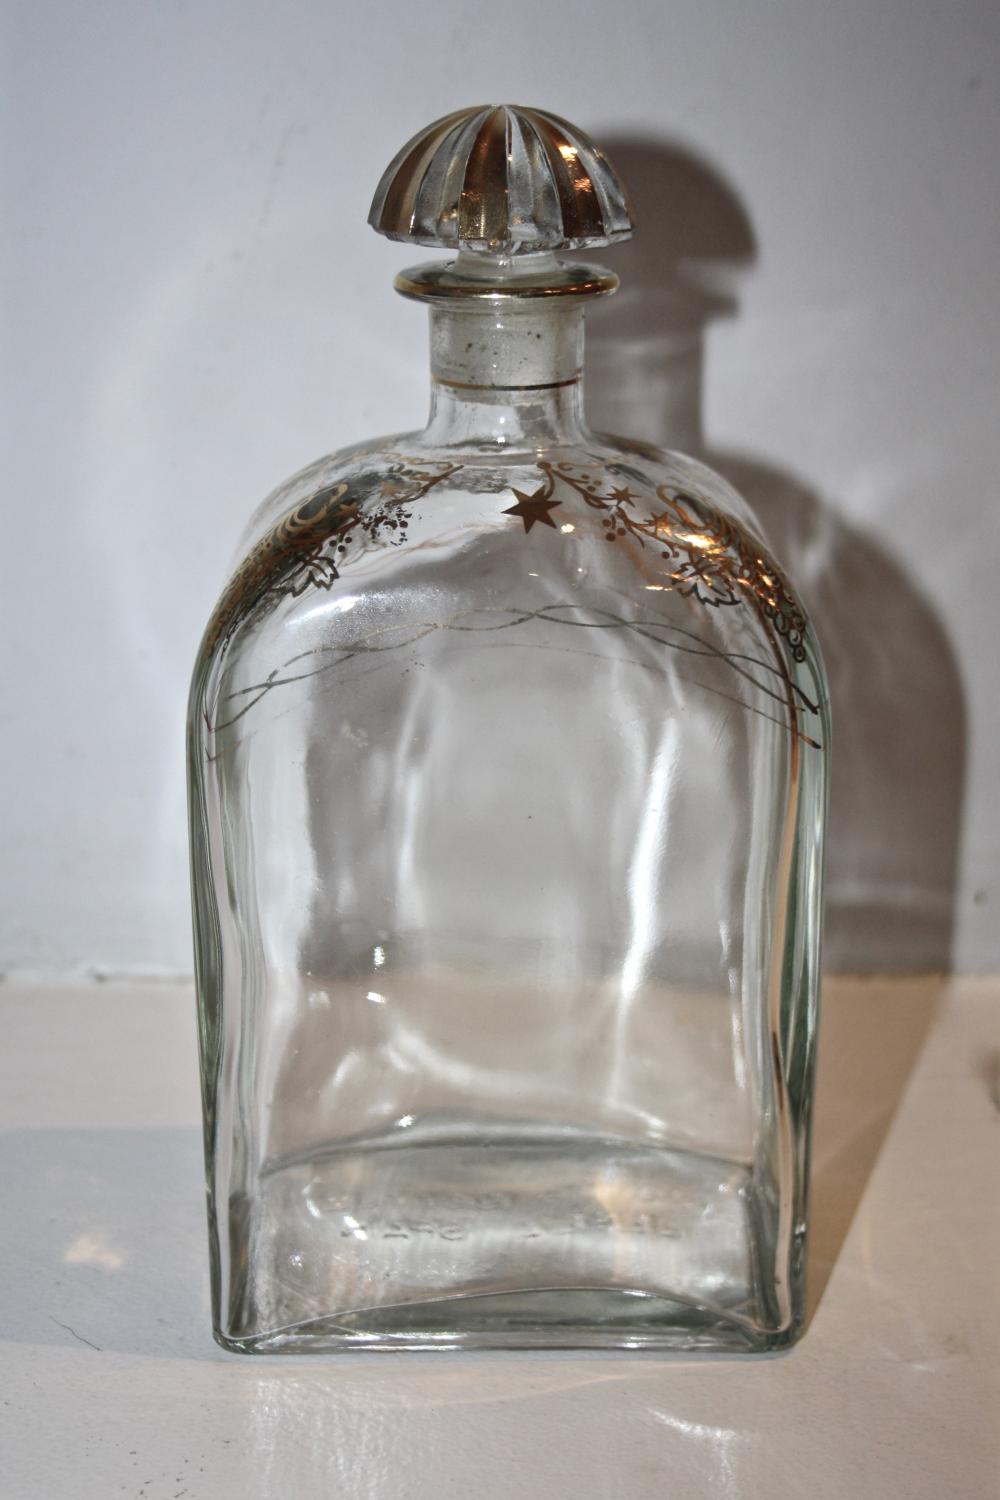 Gilded bottle and stopper